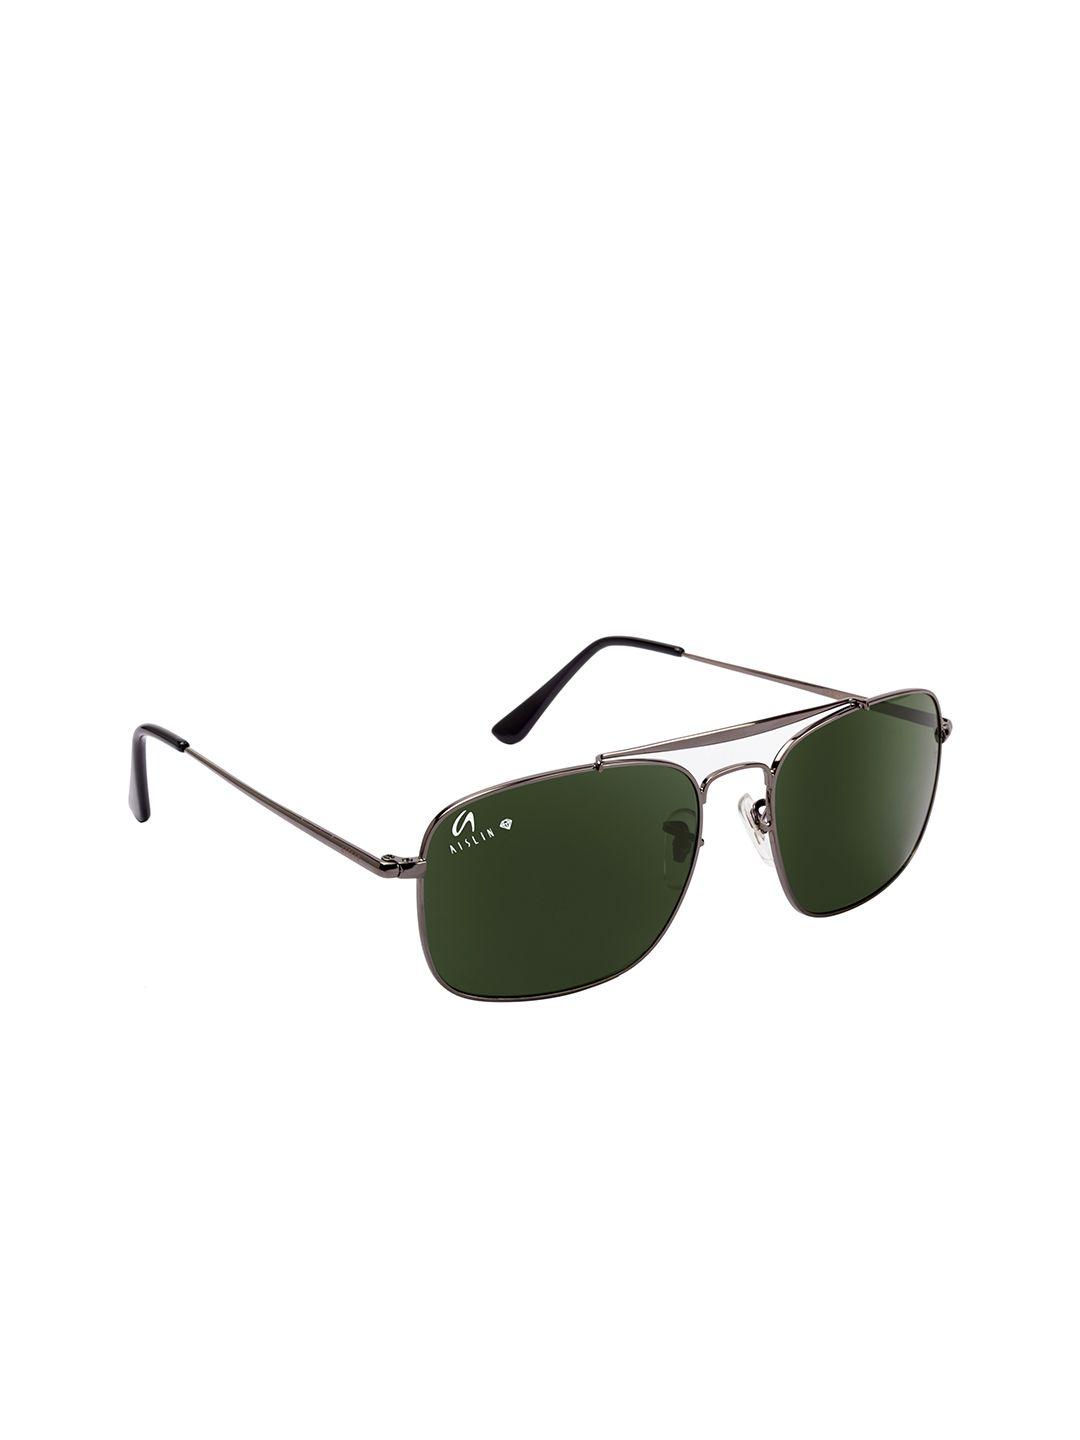 aislin men green lens wayfarer sunglasses with uv protected lens-13182-5-as-3469